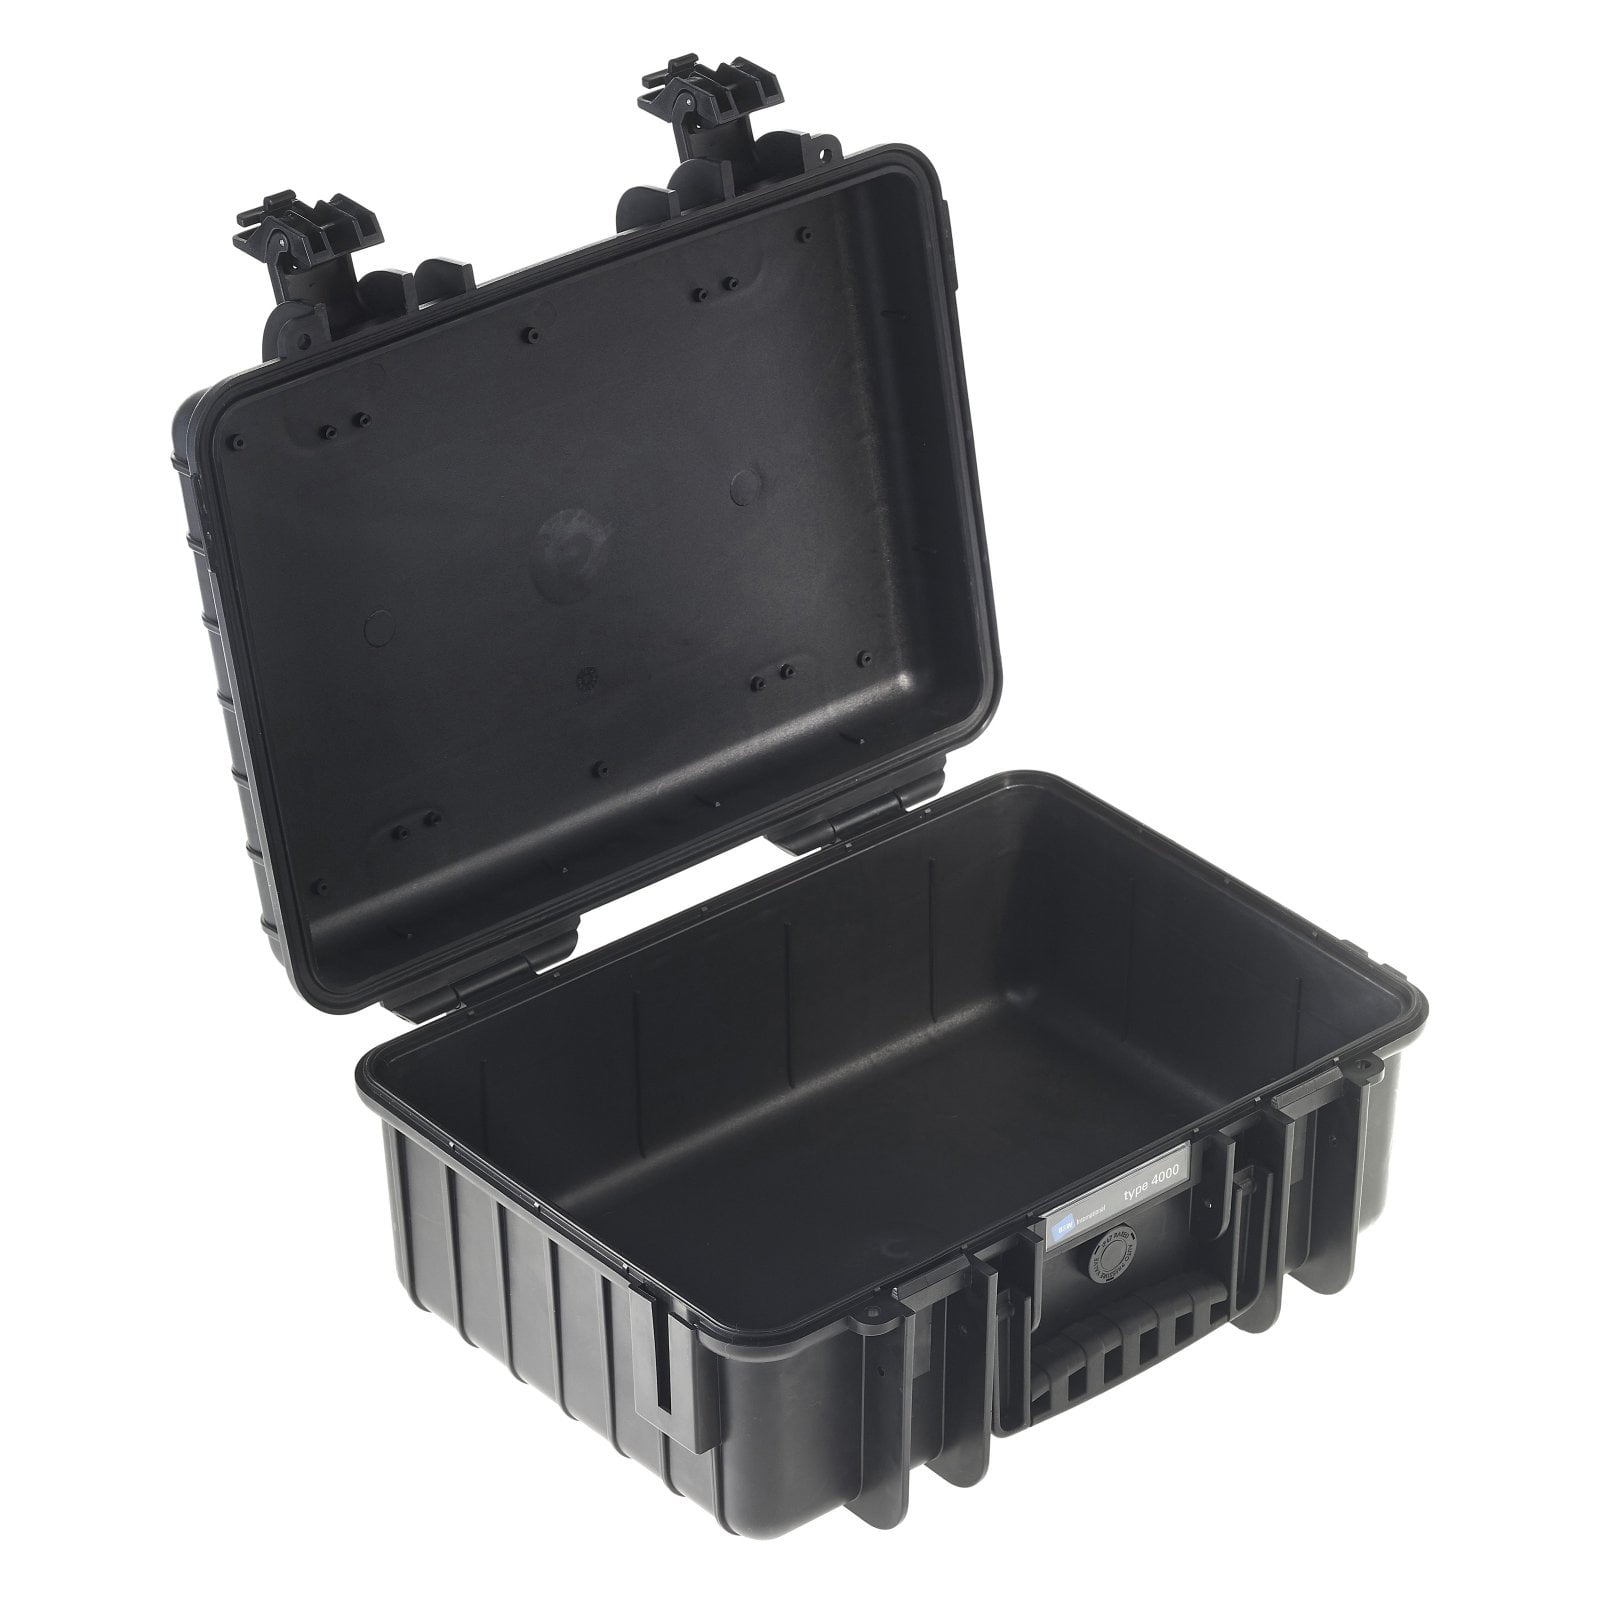 B and W Type 4000 Waterproof Outdoor Storage Case 